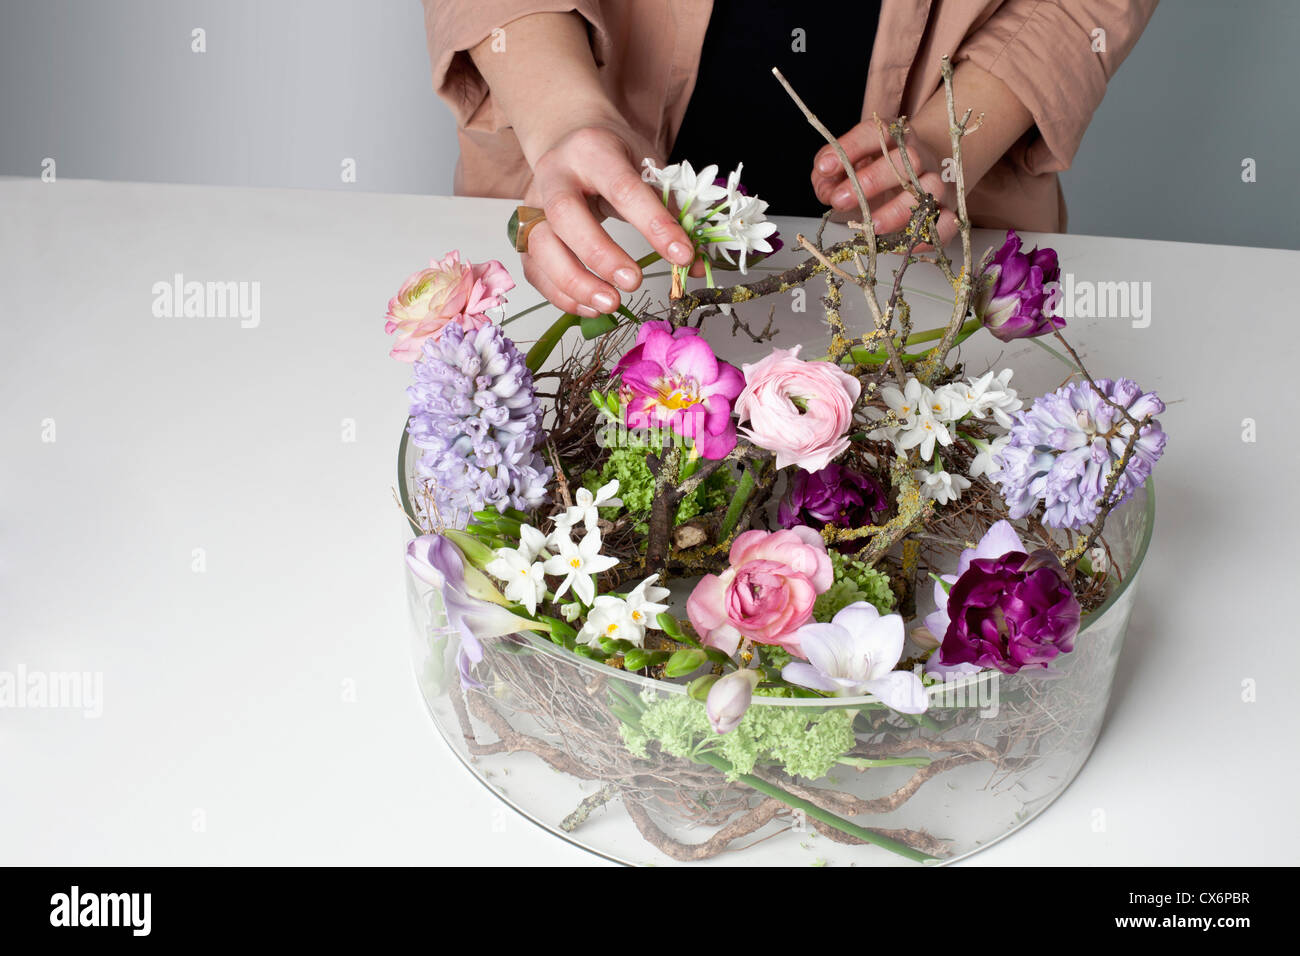 A florist arranging flowers in a glass bowel vase Stock Photo